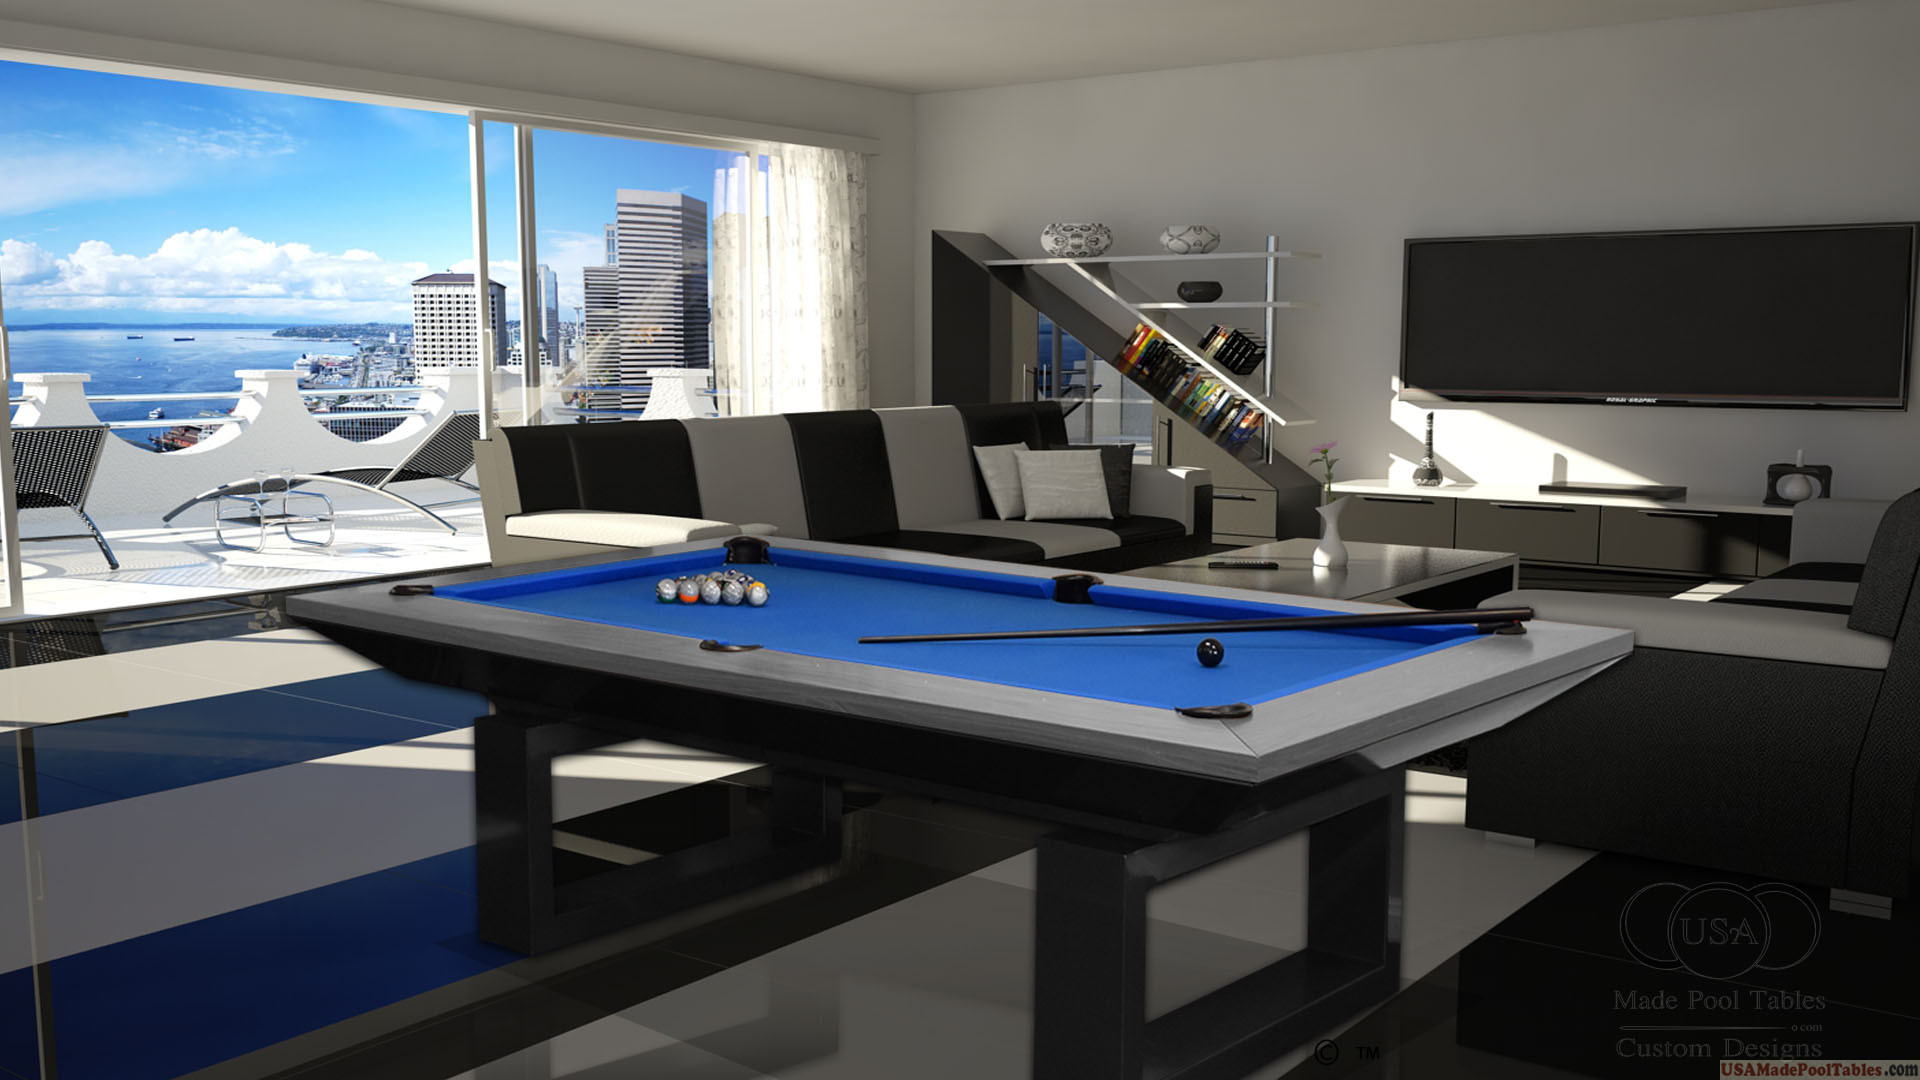 Luxury Modern Pool Tables